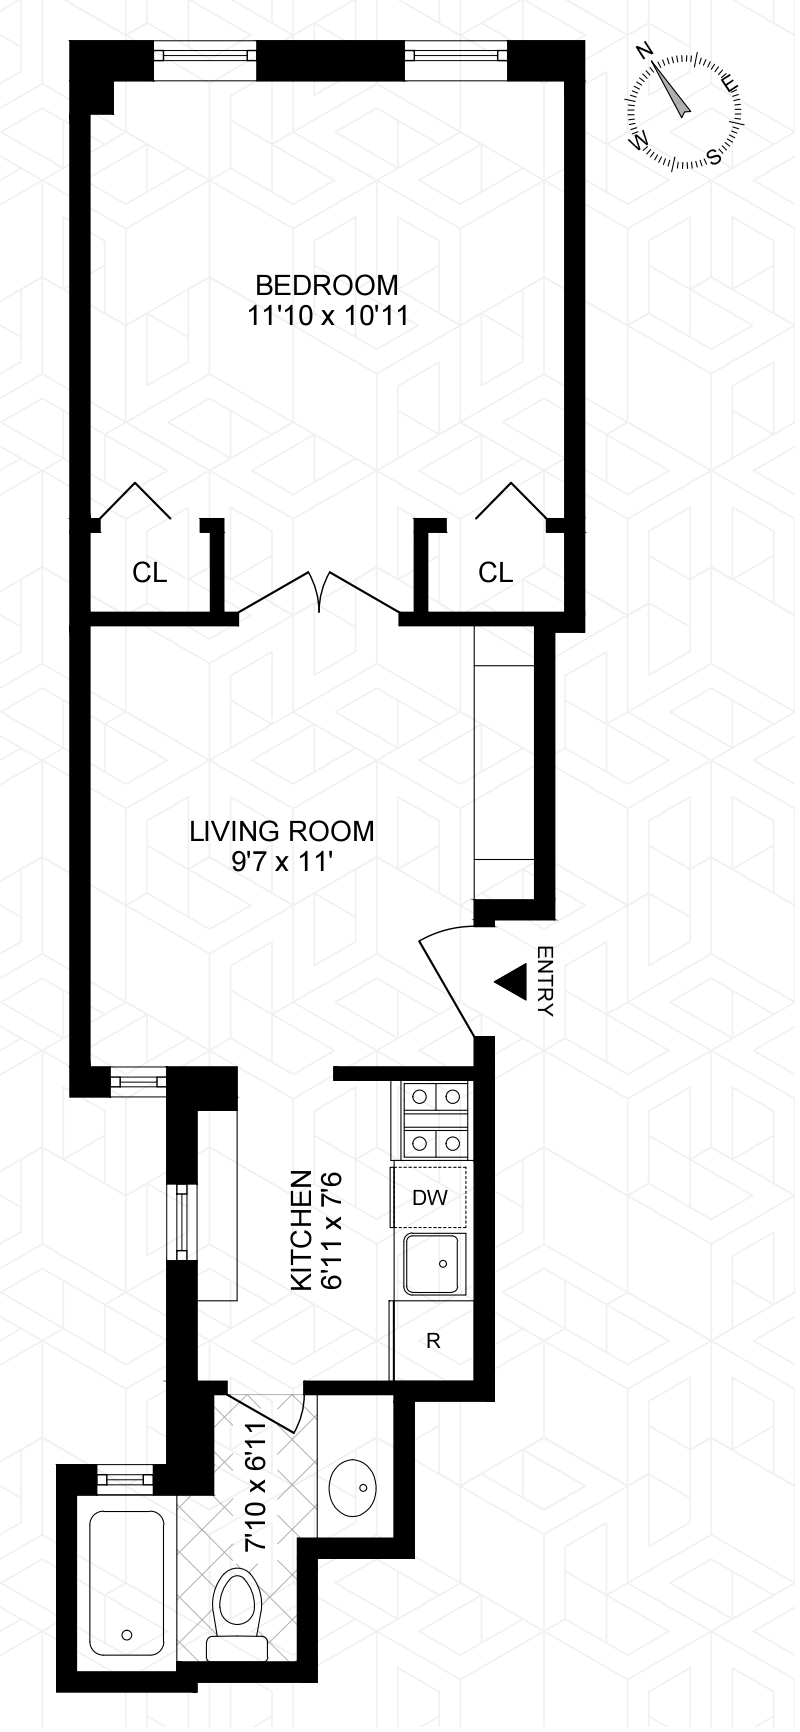 Floorplan for 215 East 88th Street